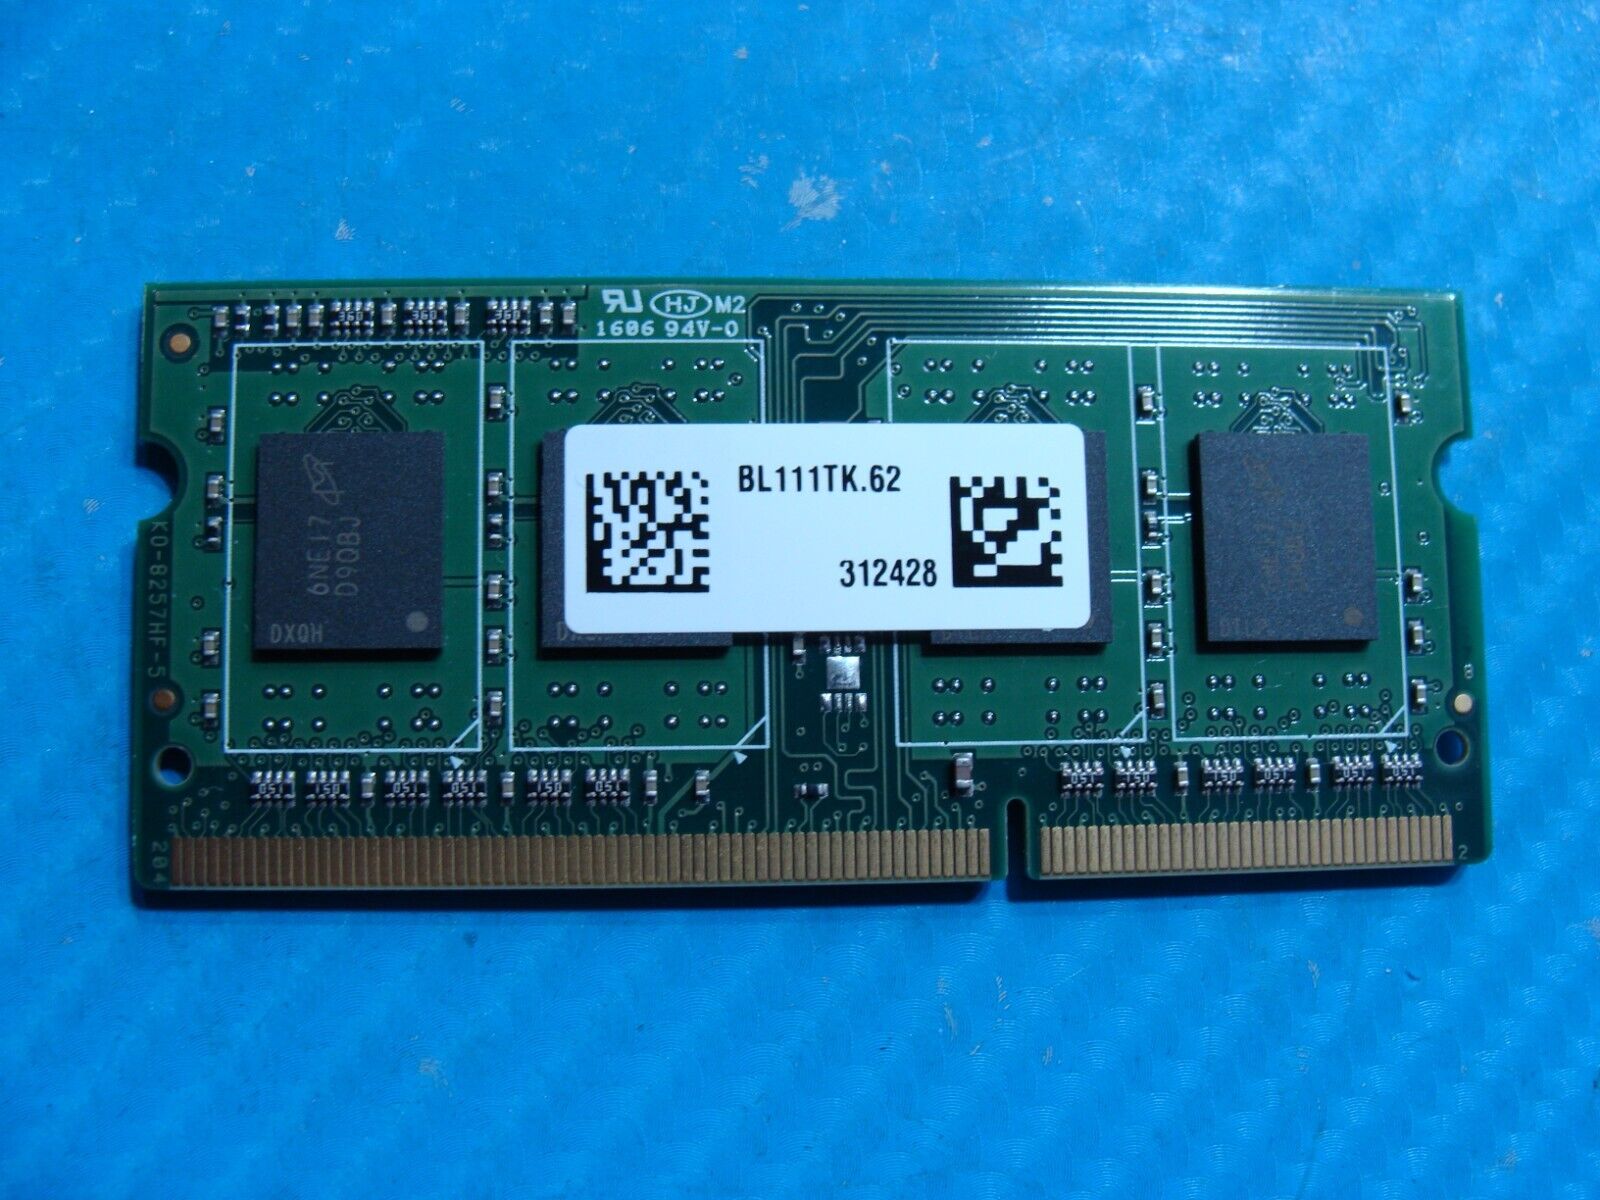 MacBook Pro A1286 Crucial 4GB DDR3L-1600 Memory RAM SO-DIMM CT4G3S160BJM.M8FED